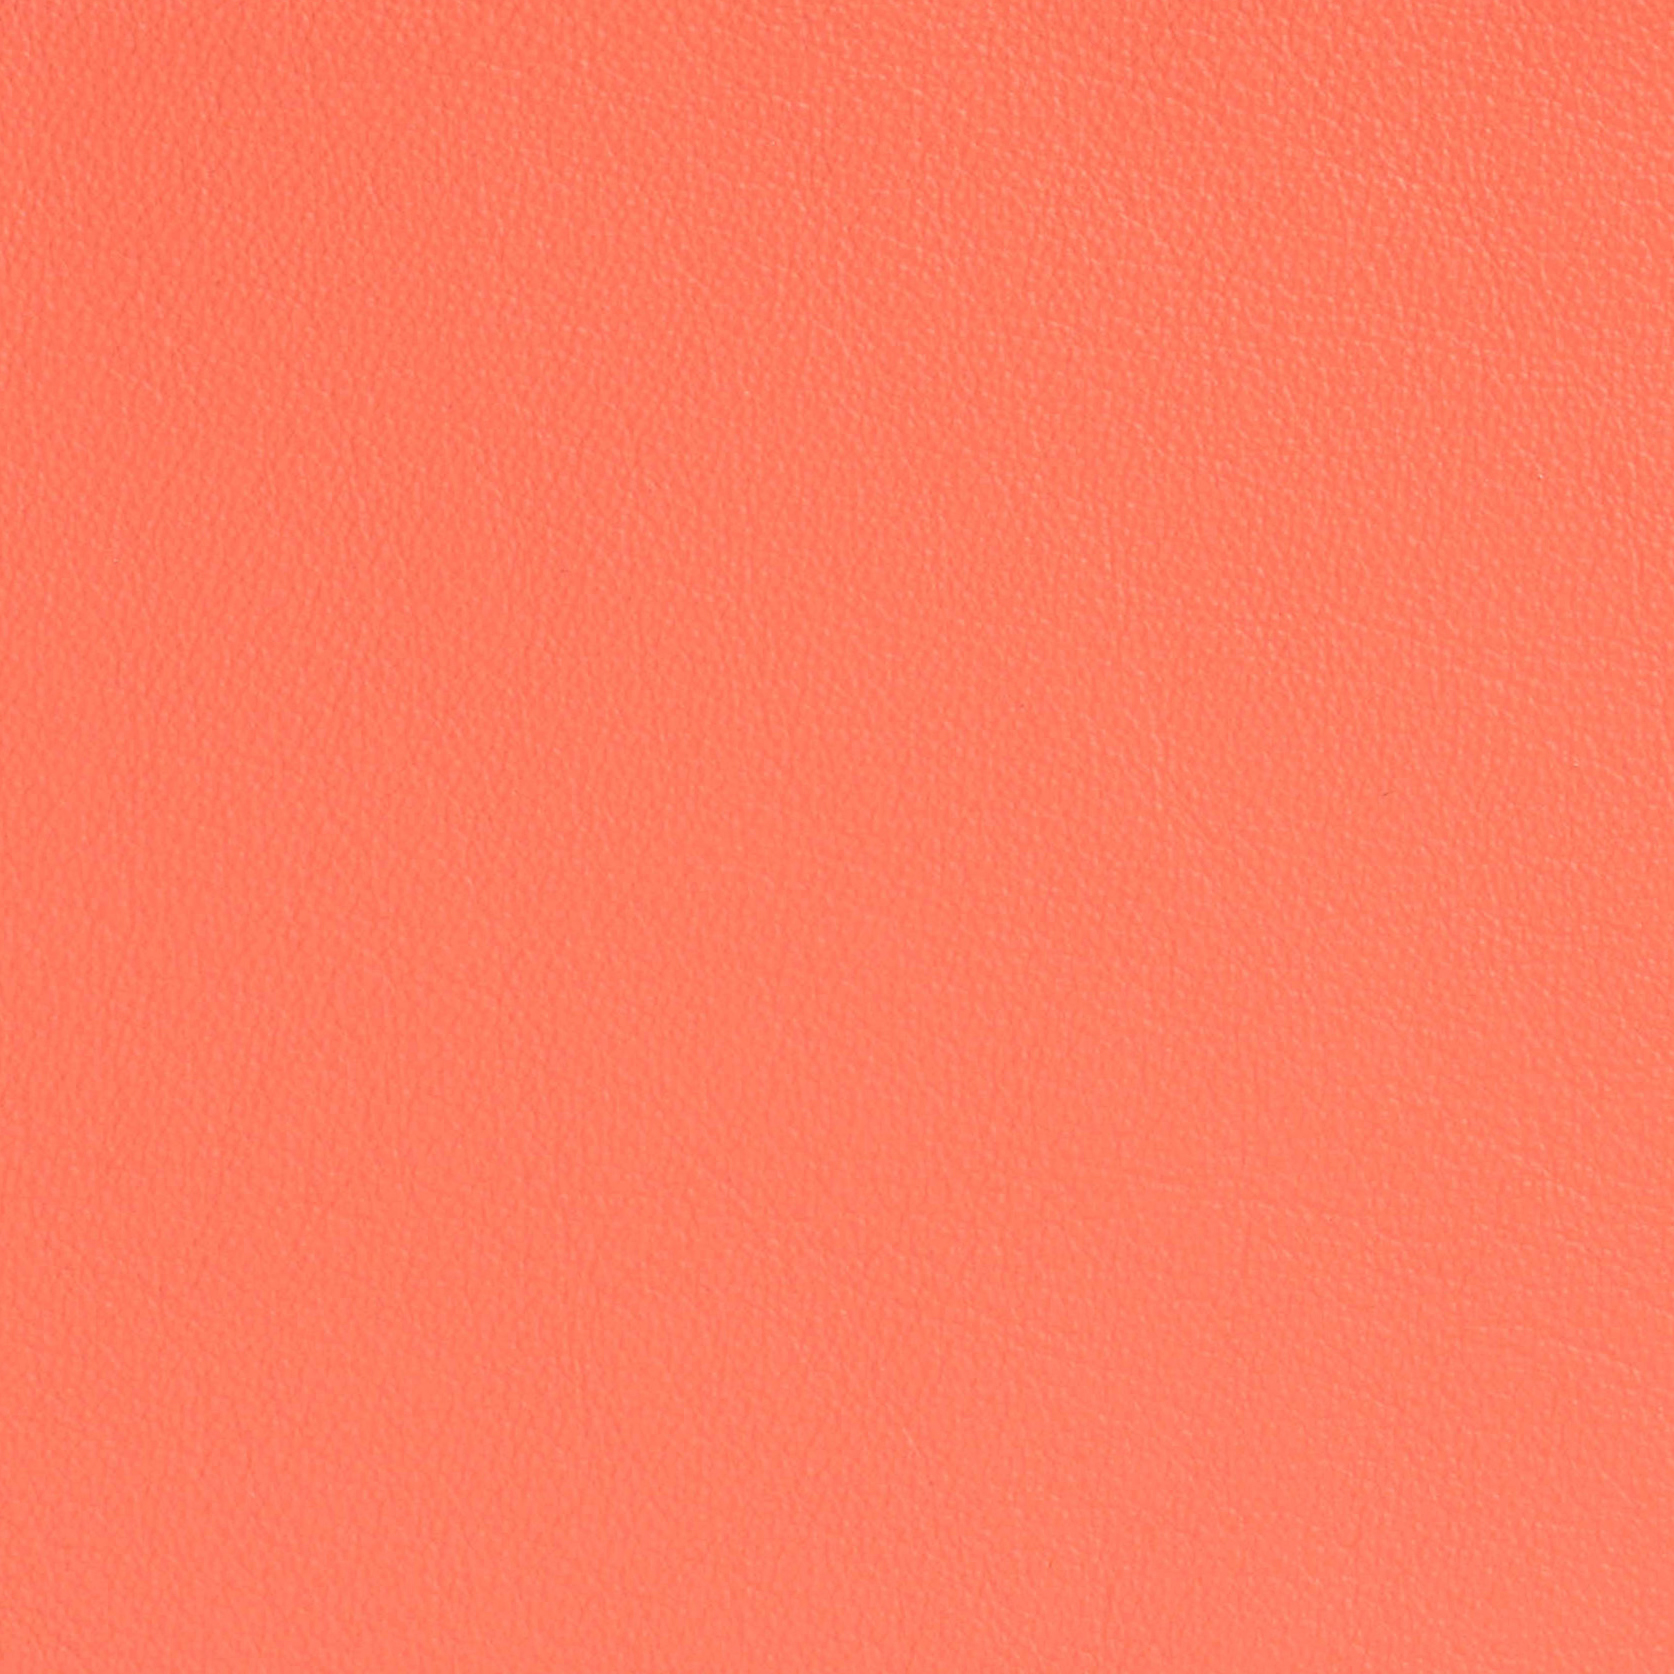 Elmosoft Leather Orange Red